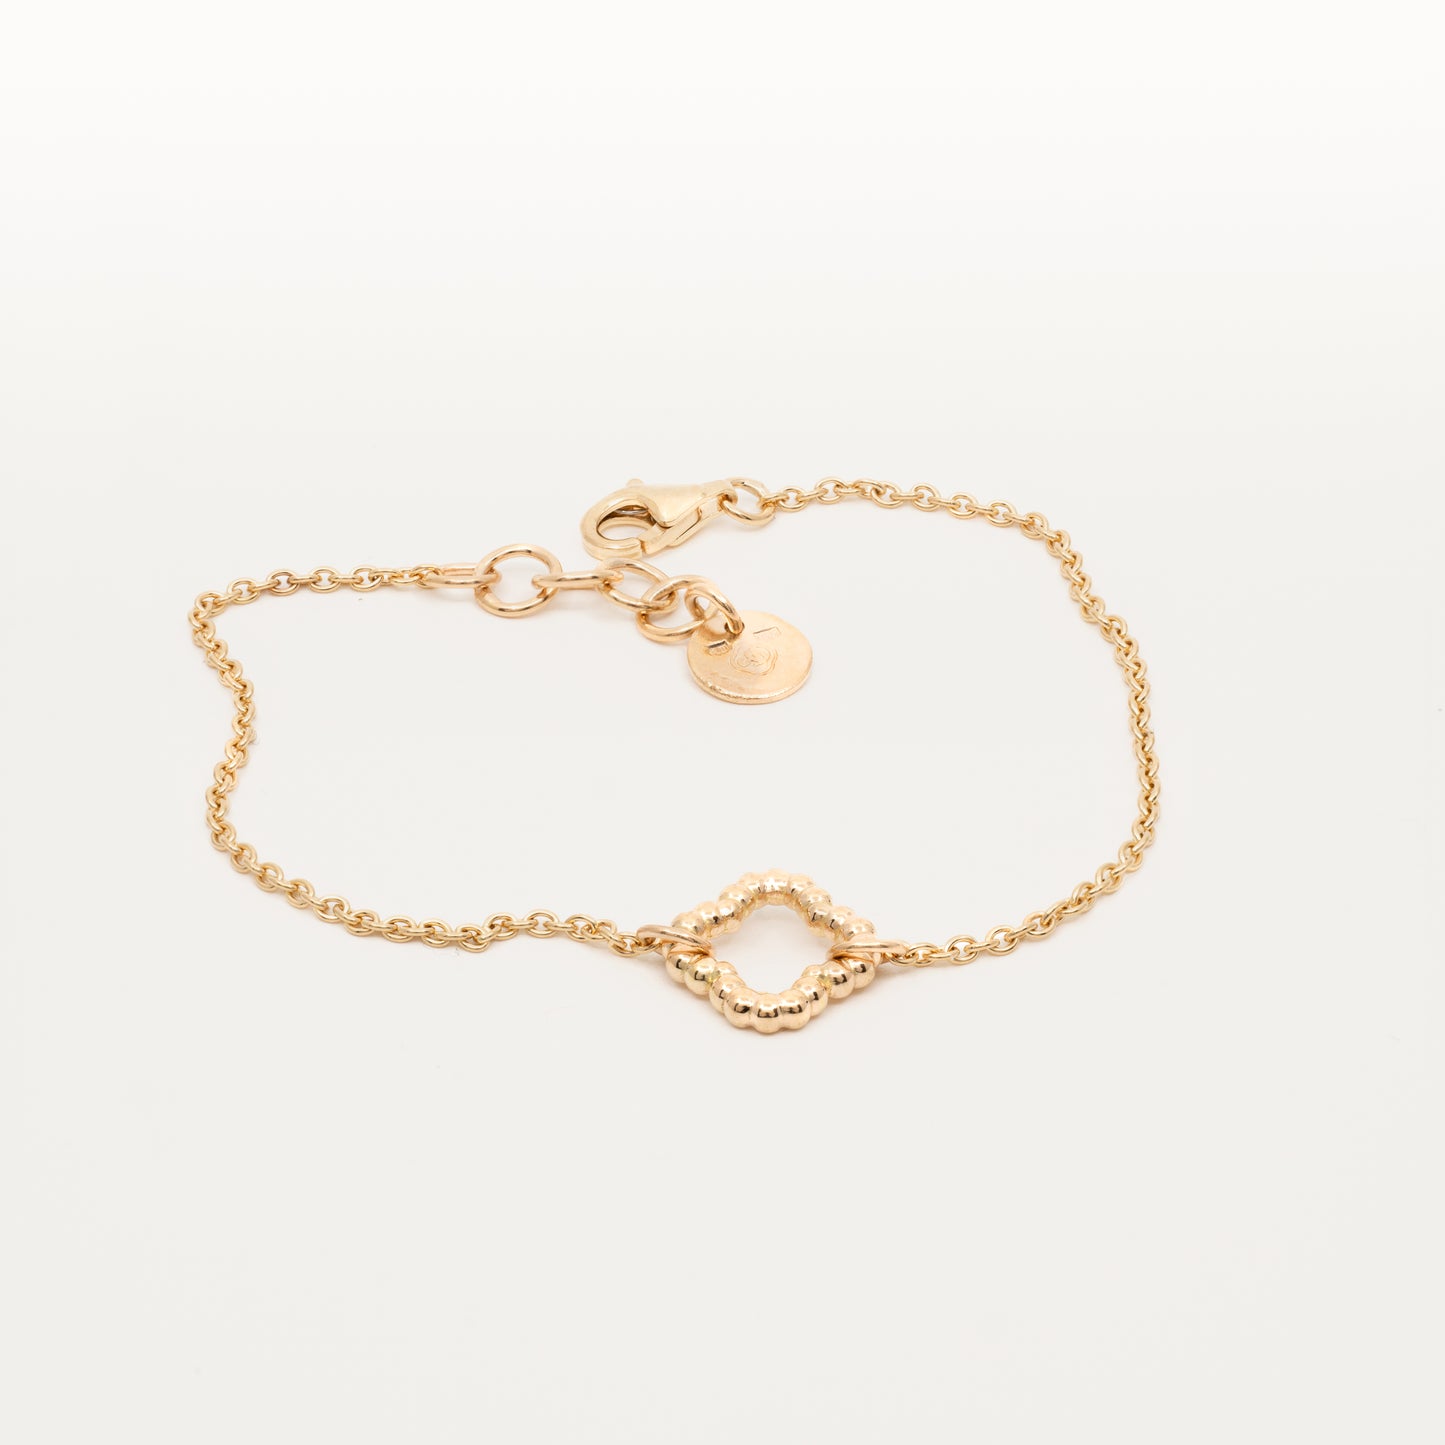 Creo Marbles - Gold bracelet